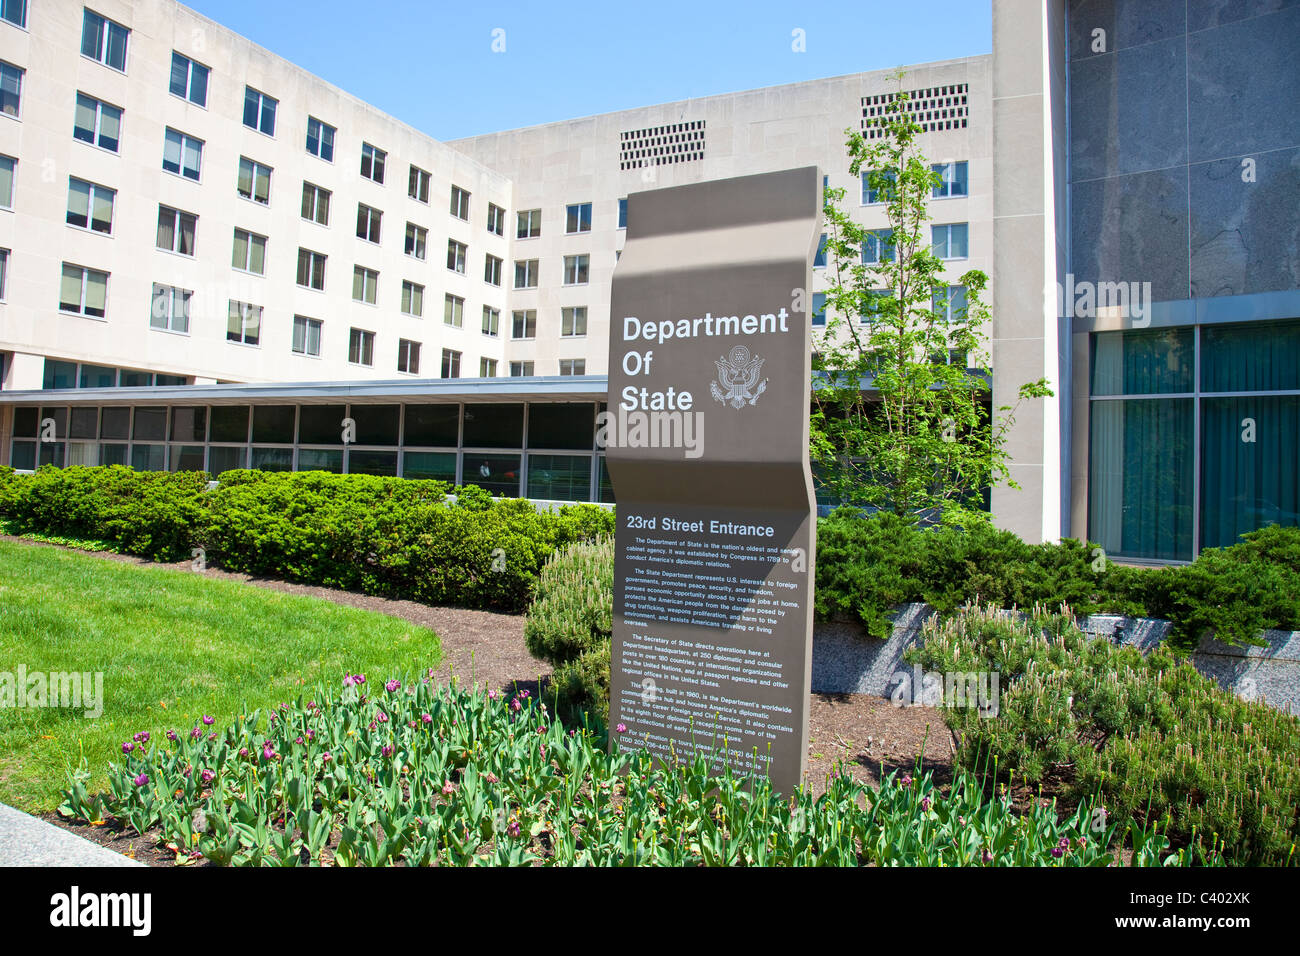 Department of State, Washington DC Stock Photo